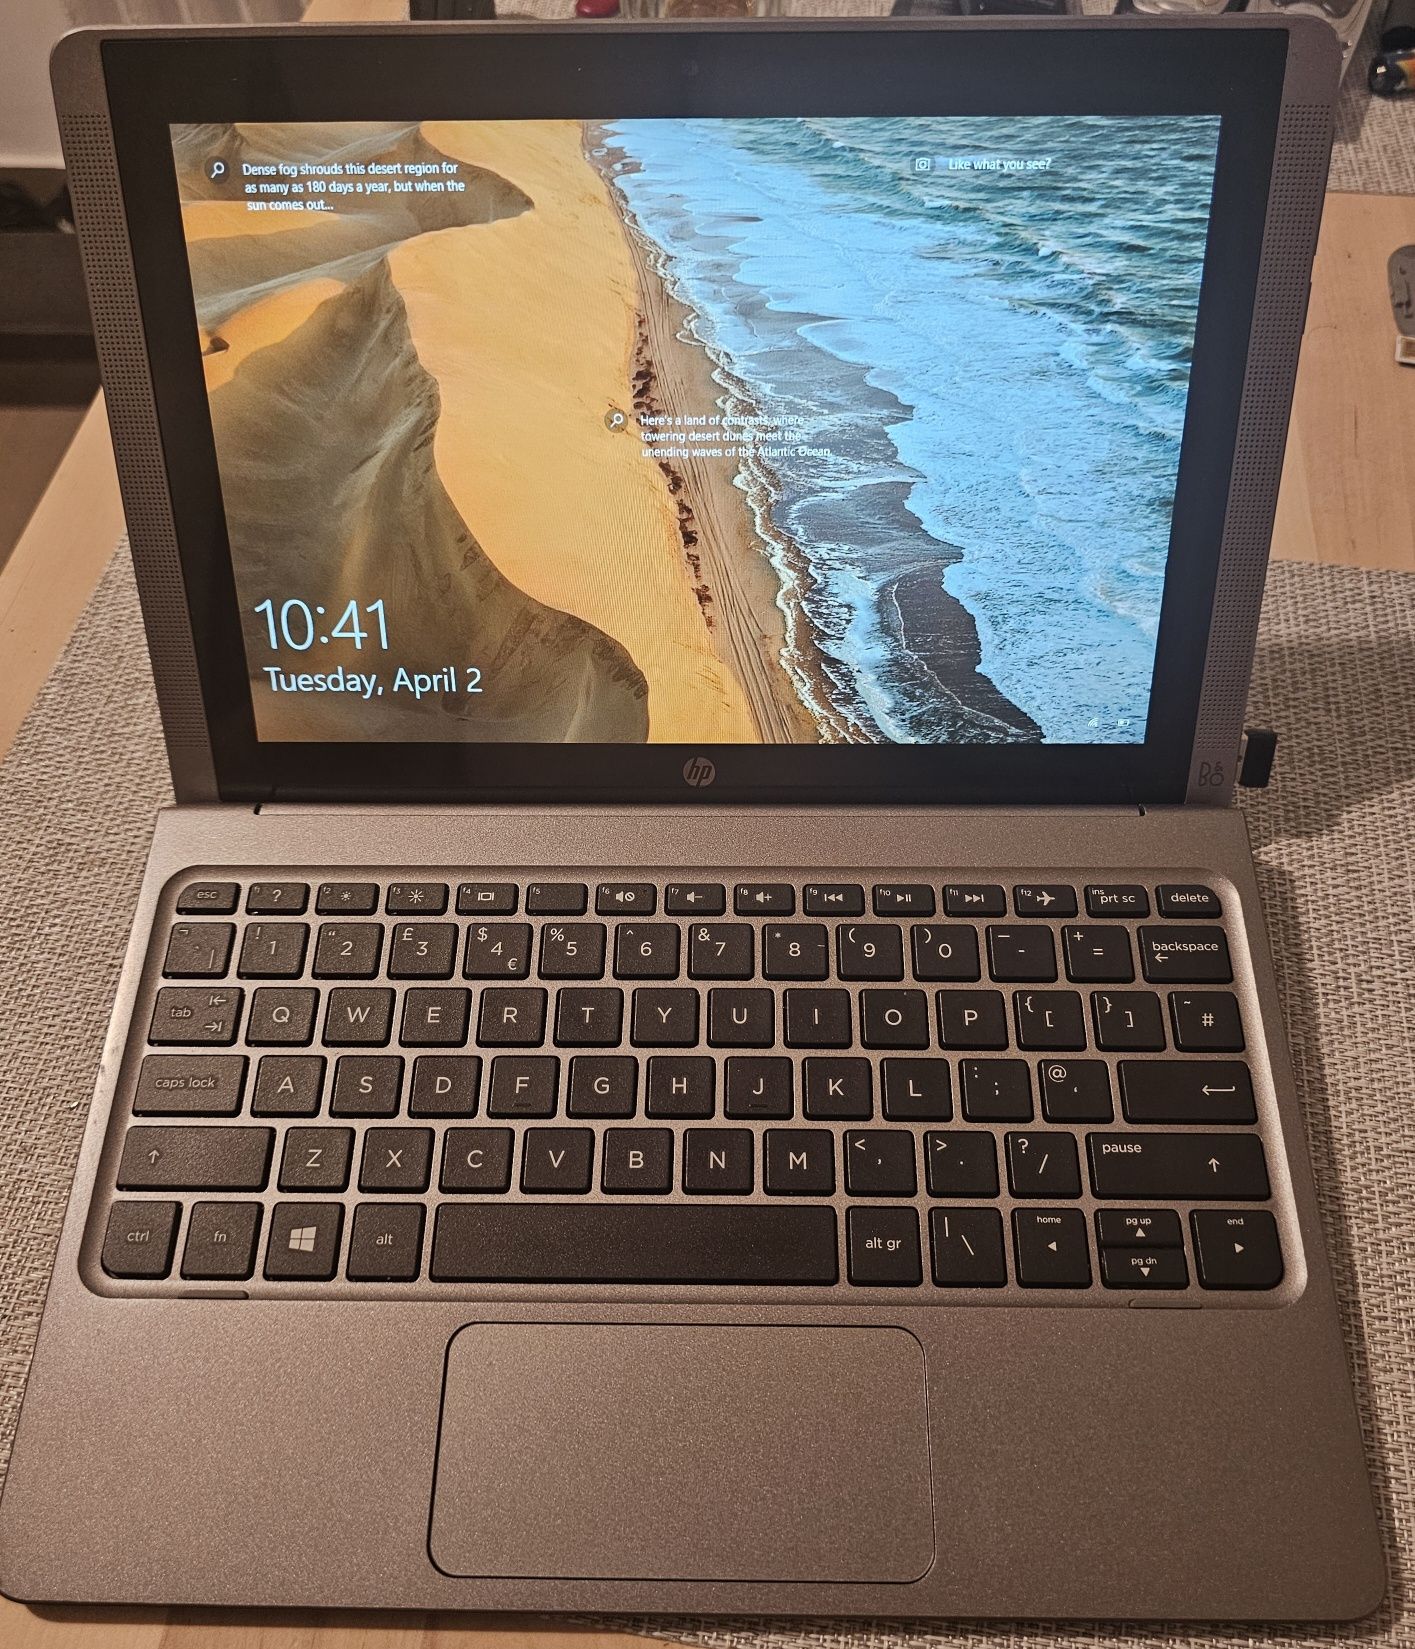 Laptop HP Pavillion X2 10-n103na 10.1" Intel Atom Z8300 1.44GHz,2GB,64